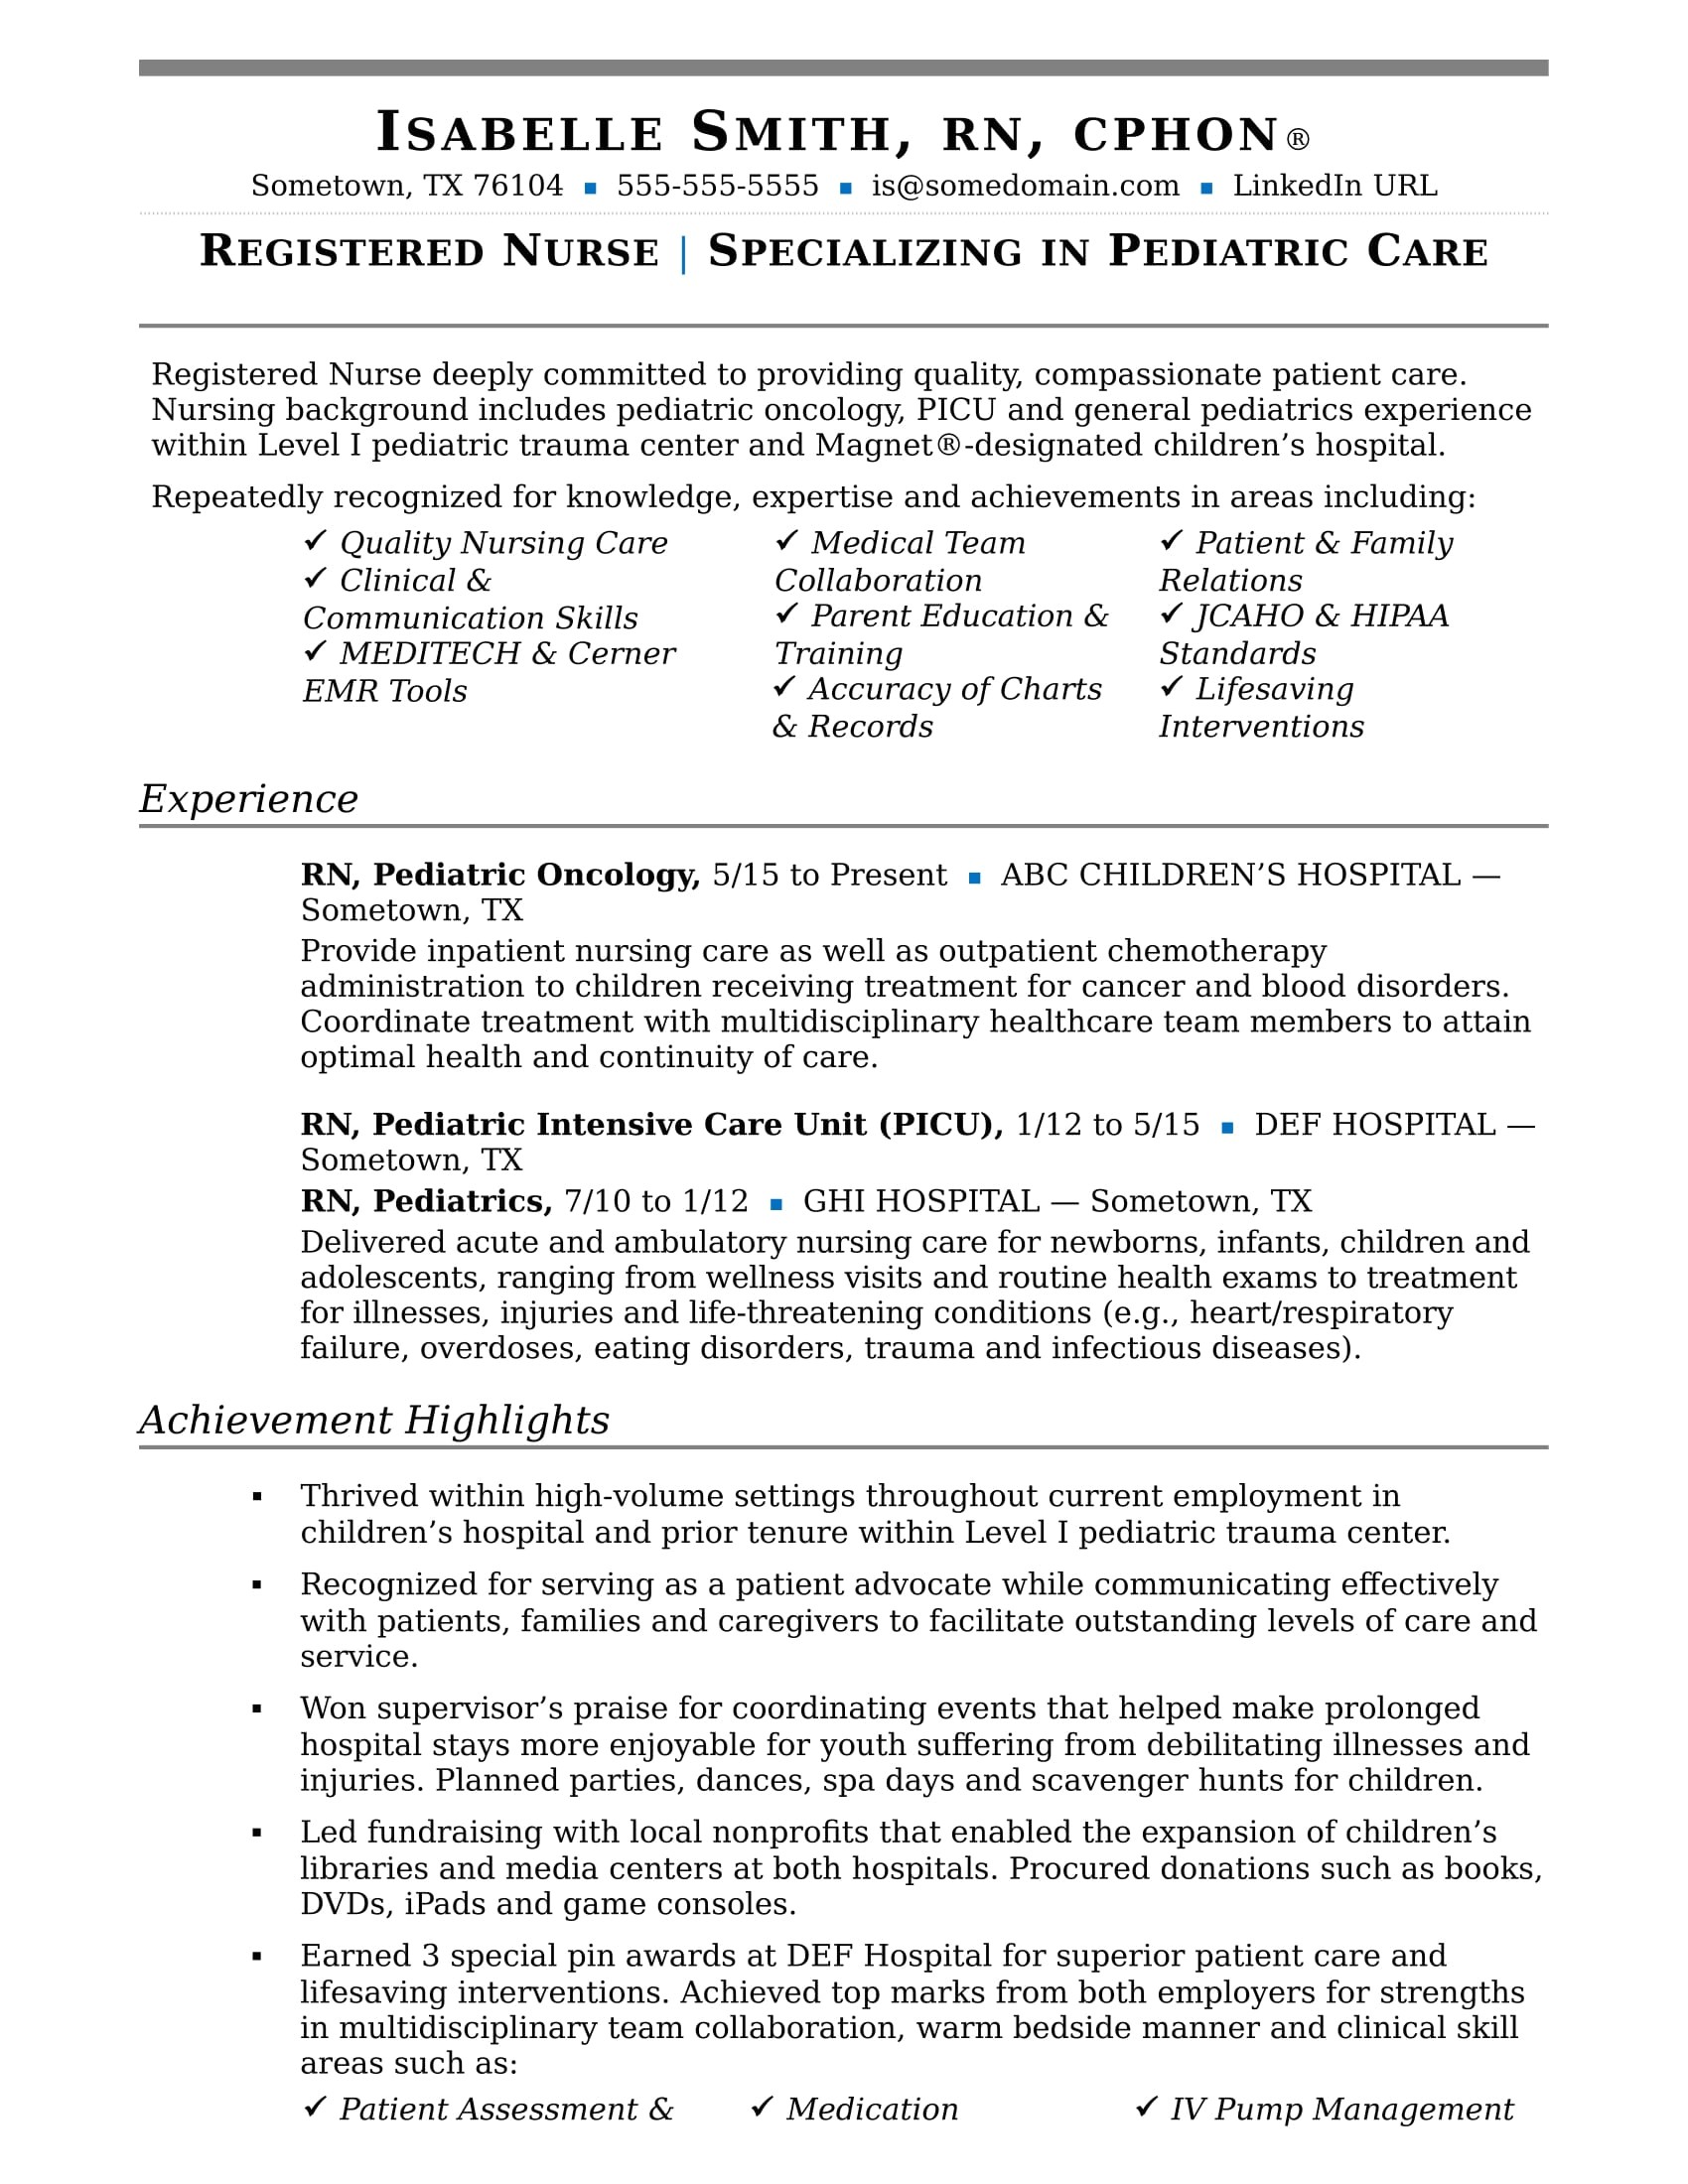 Nursing Resume Skills Sample Nurse Resume Sample Monster Com